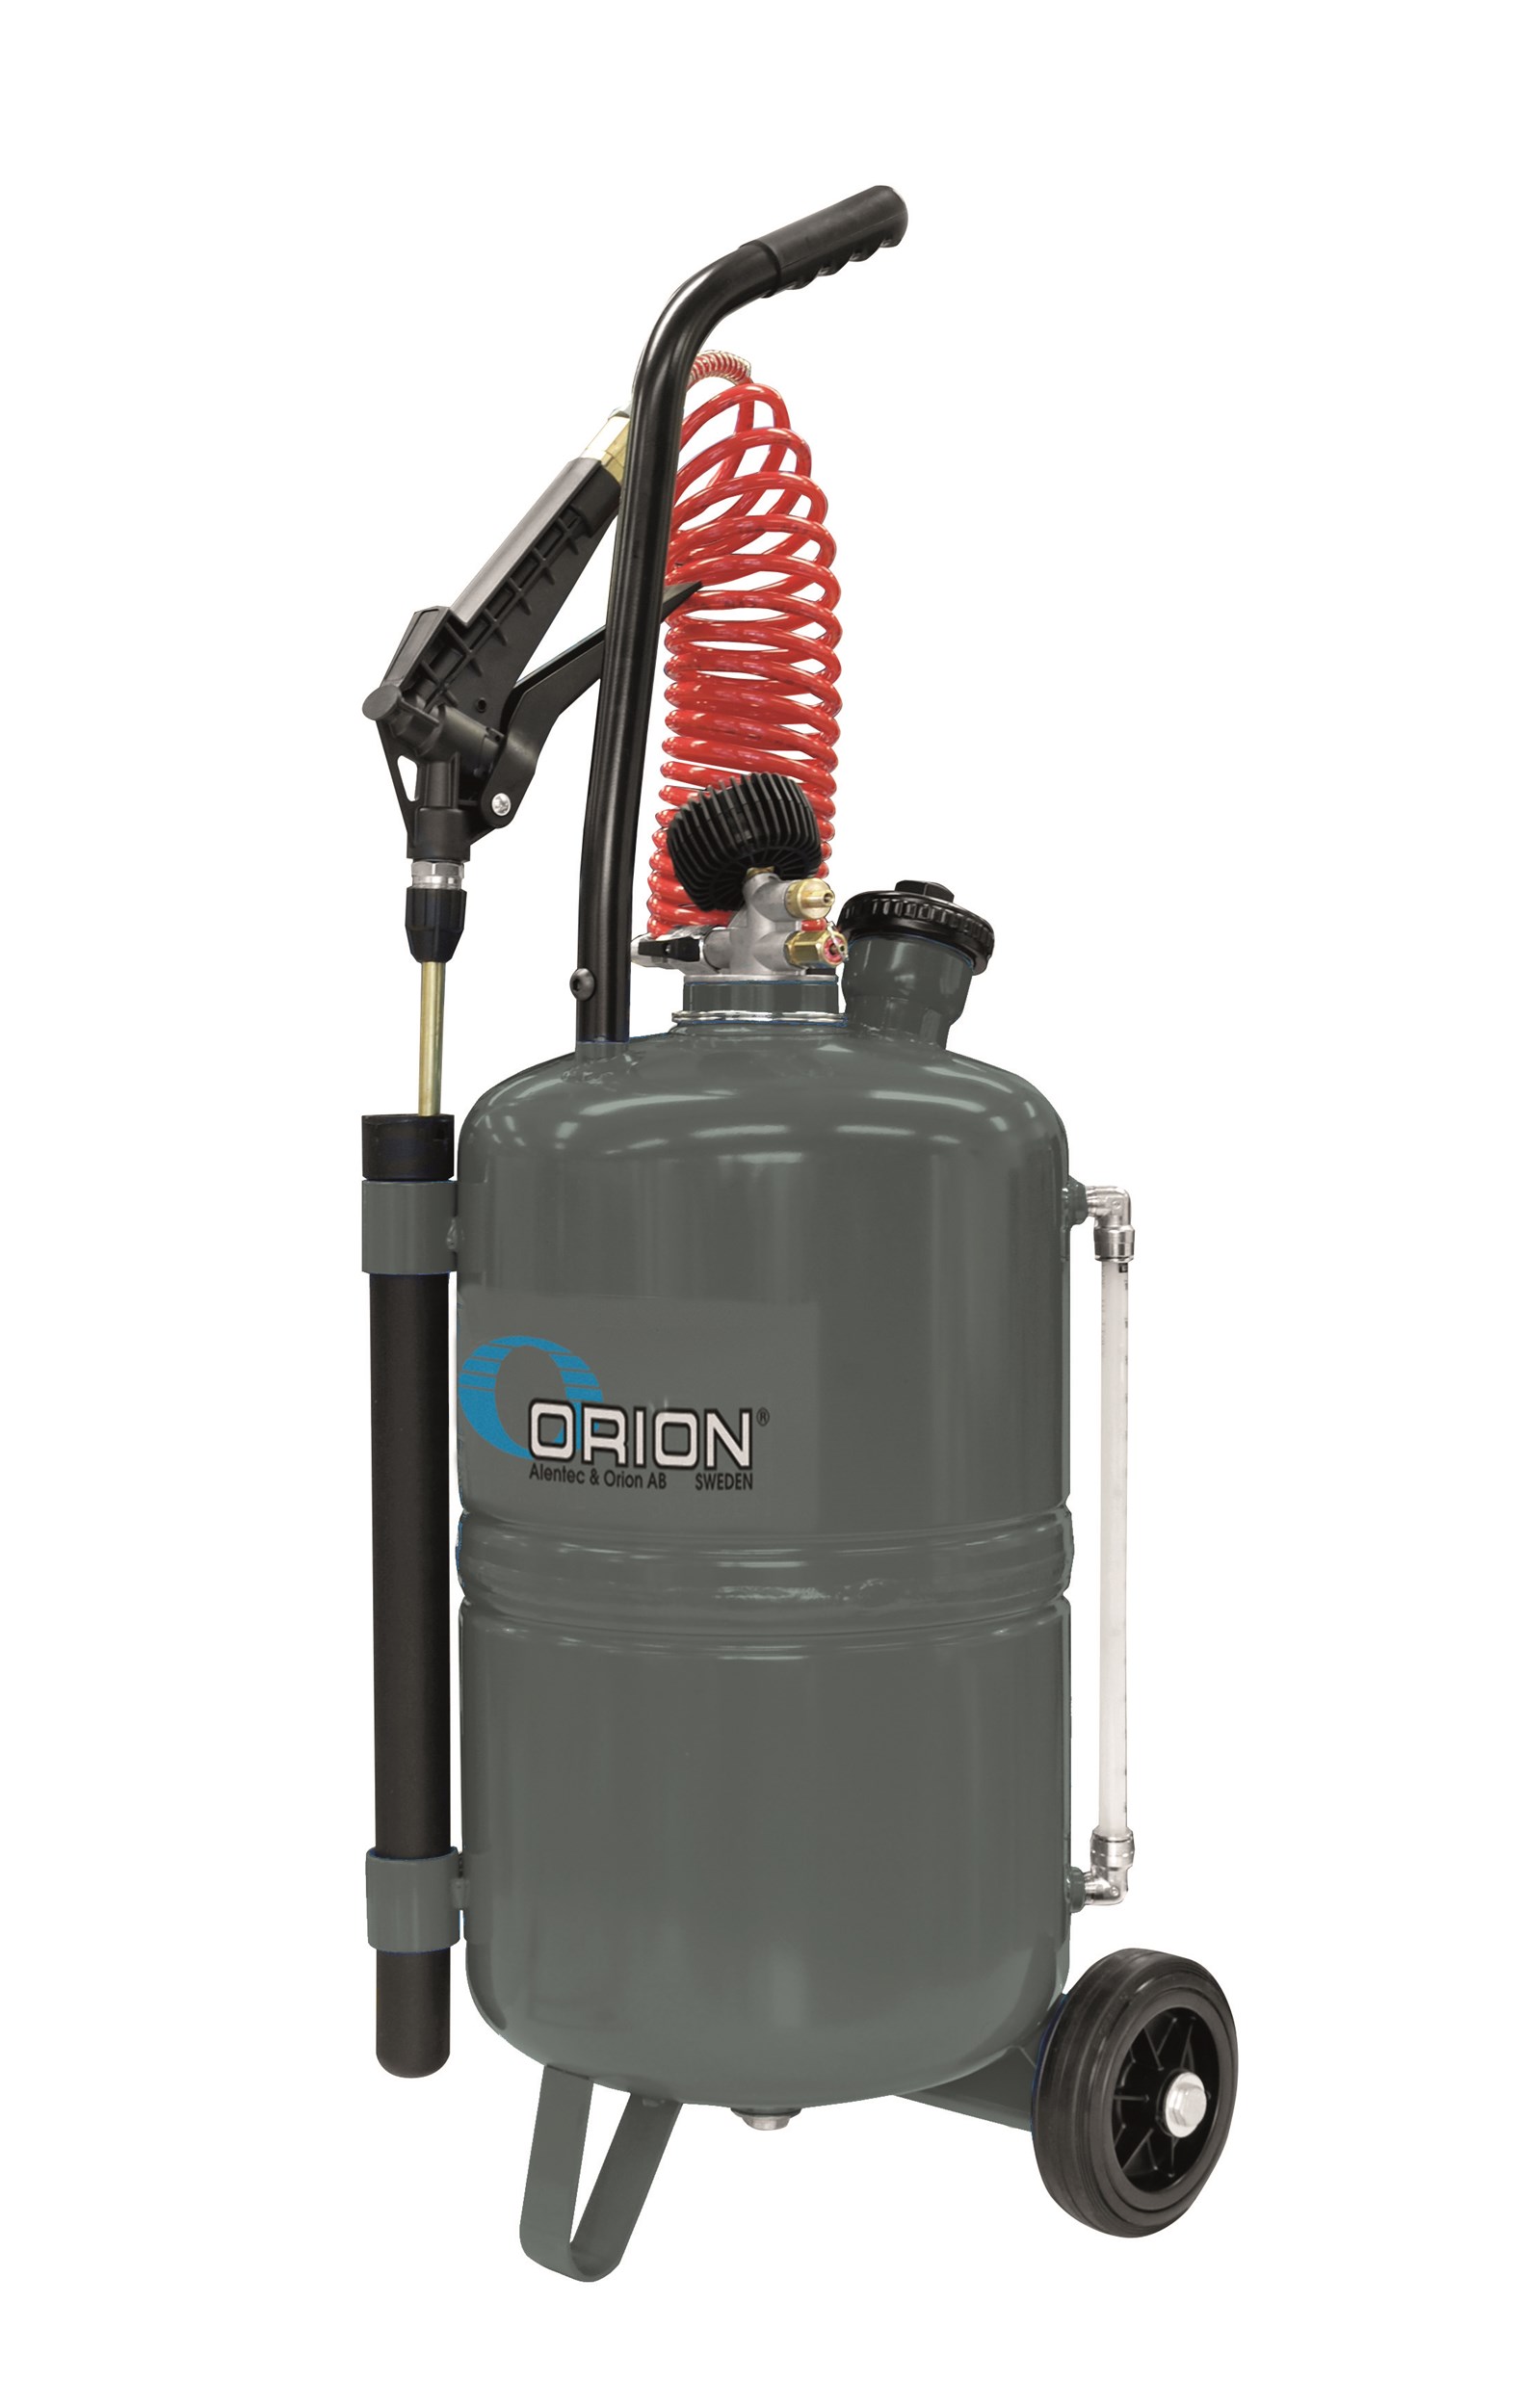 Reinig de vloer zuur gemakkelijk Mobiele sproeier 24 liter - Alentec & Orion AB